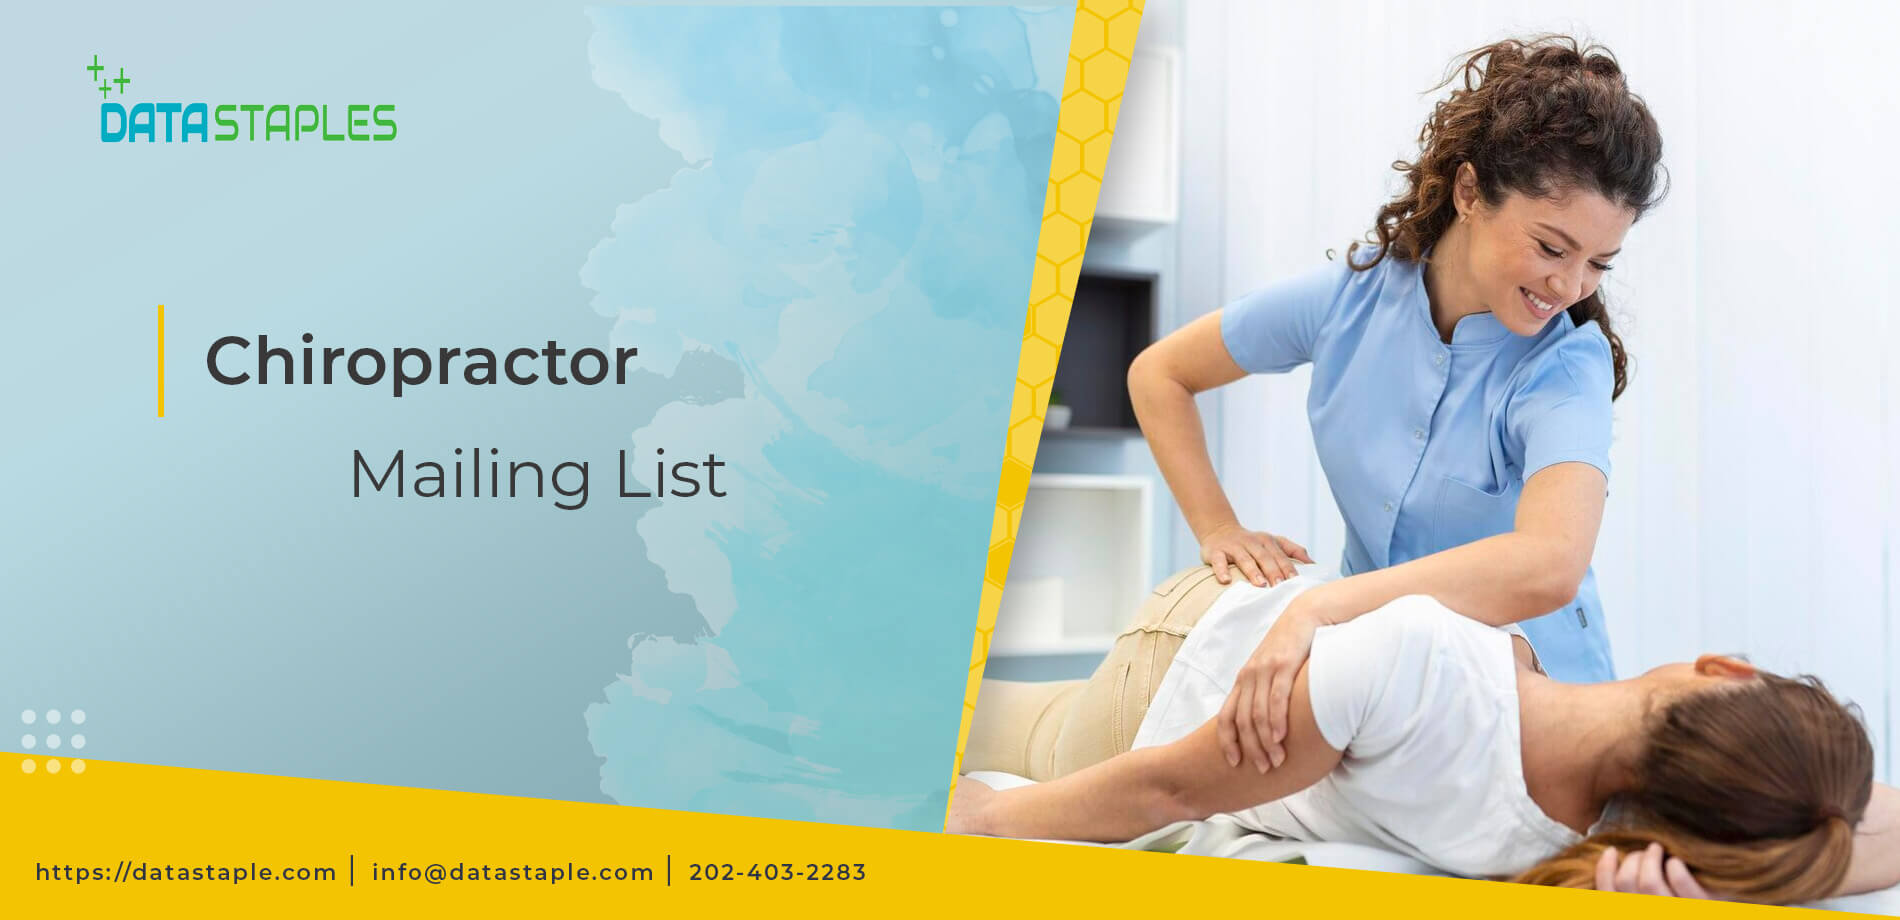 Chiropractor Mailing List | DataStaples